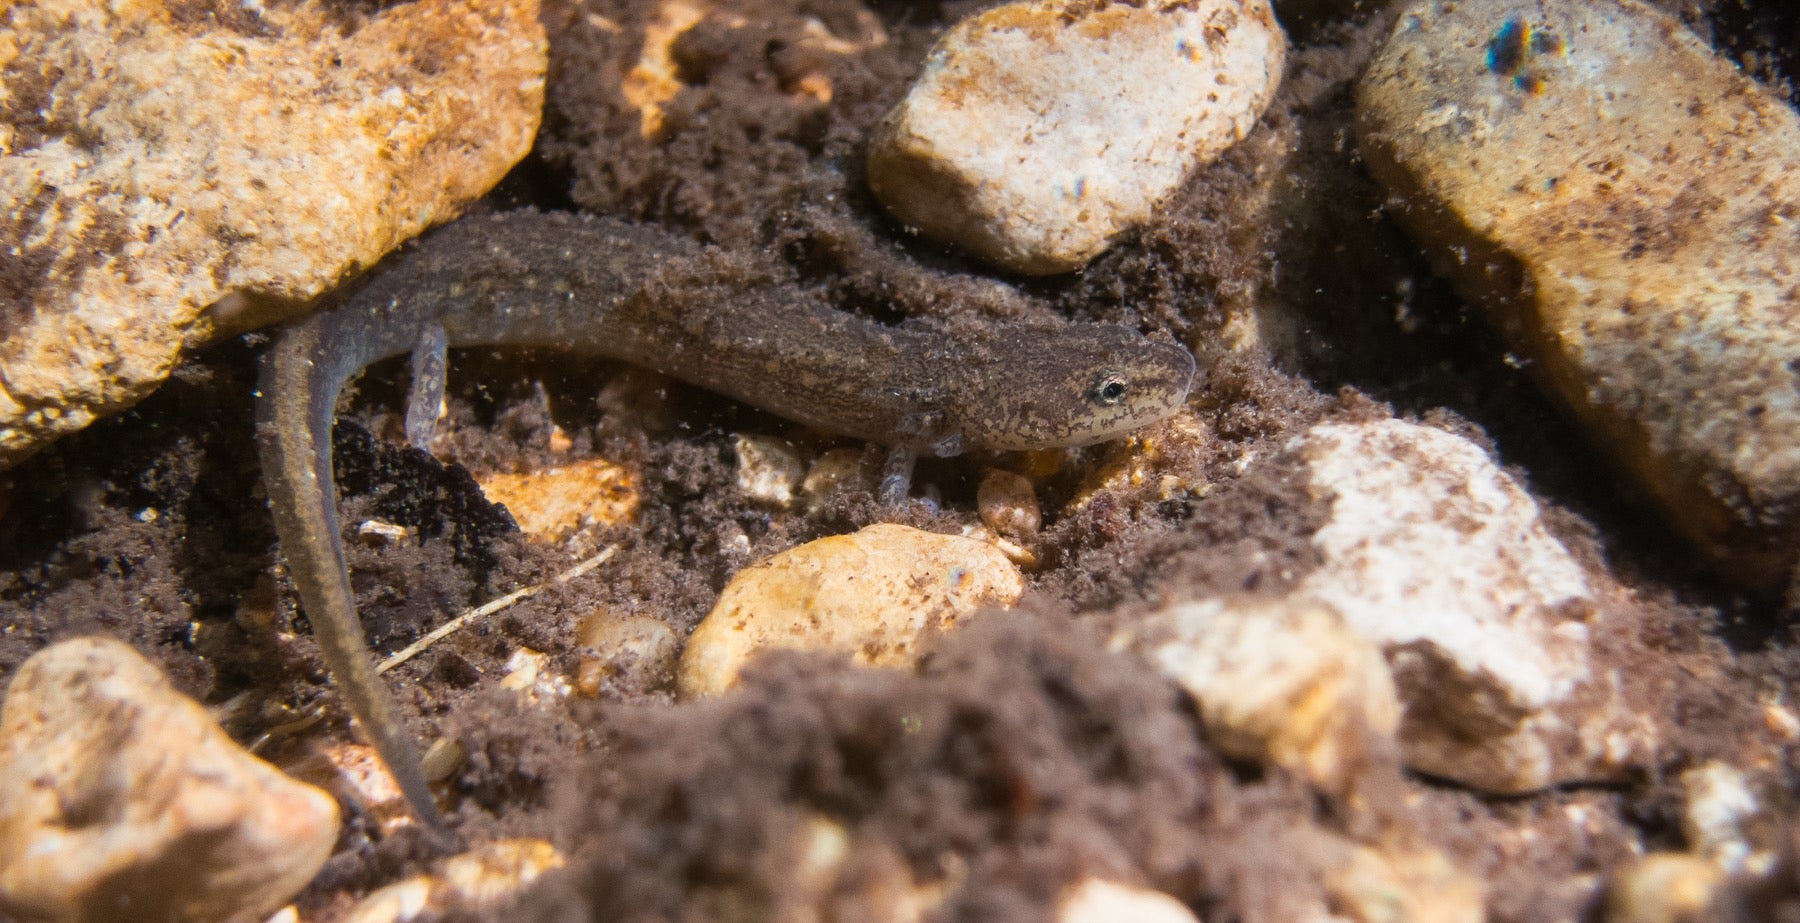 a brown salamander on some rocks